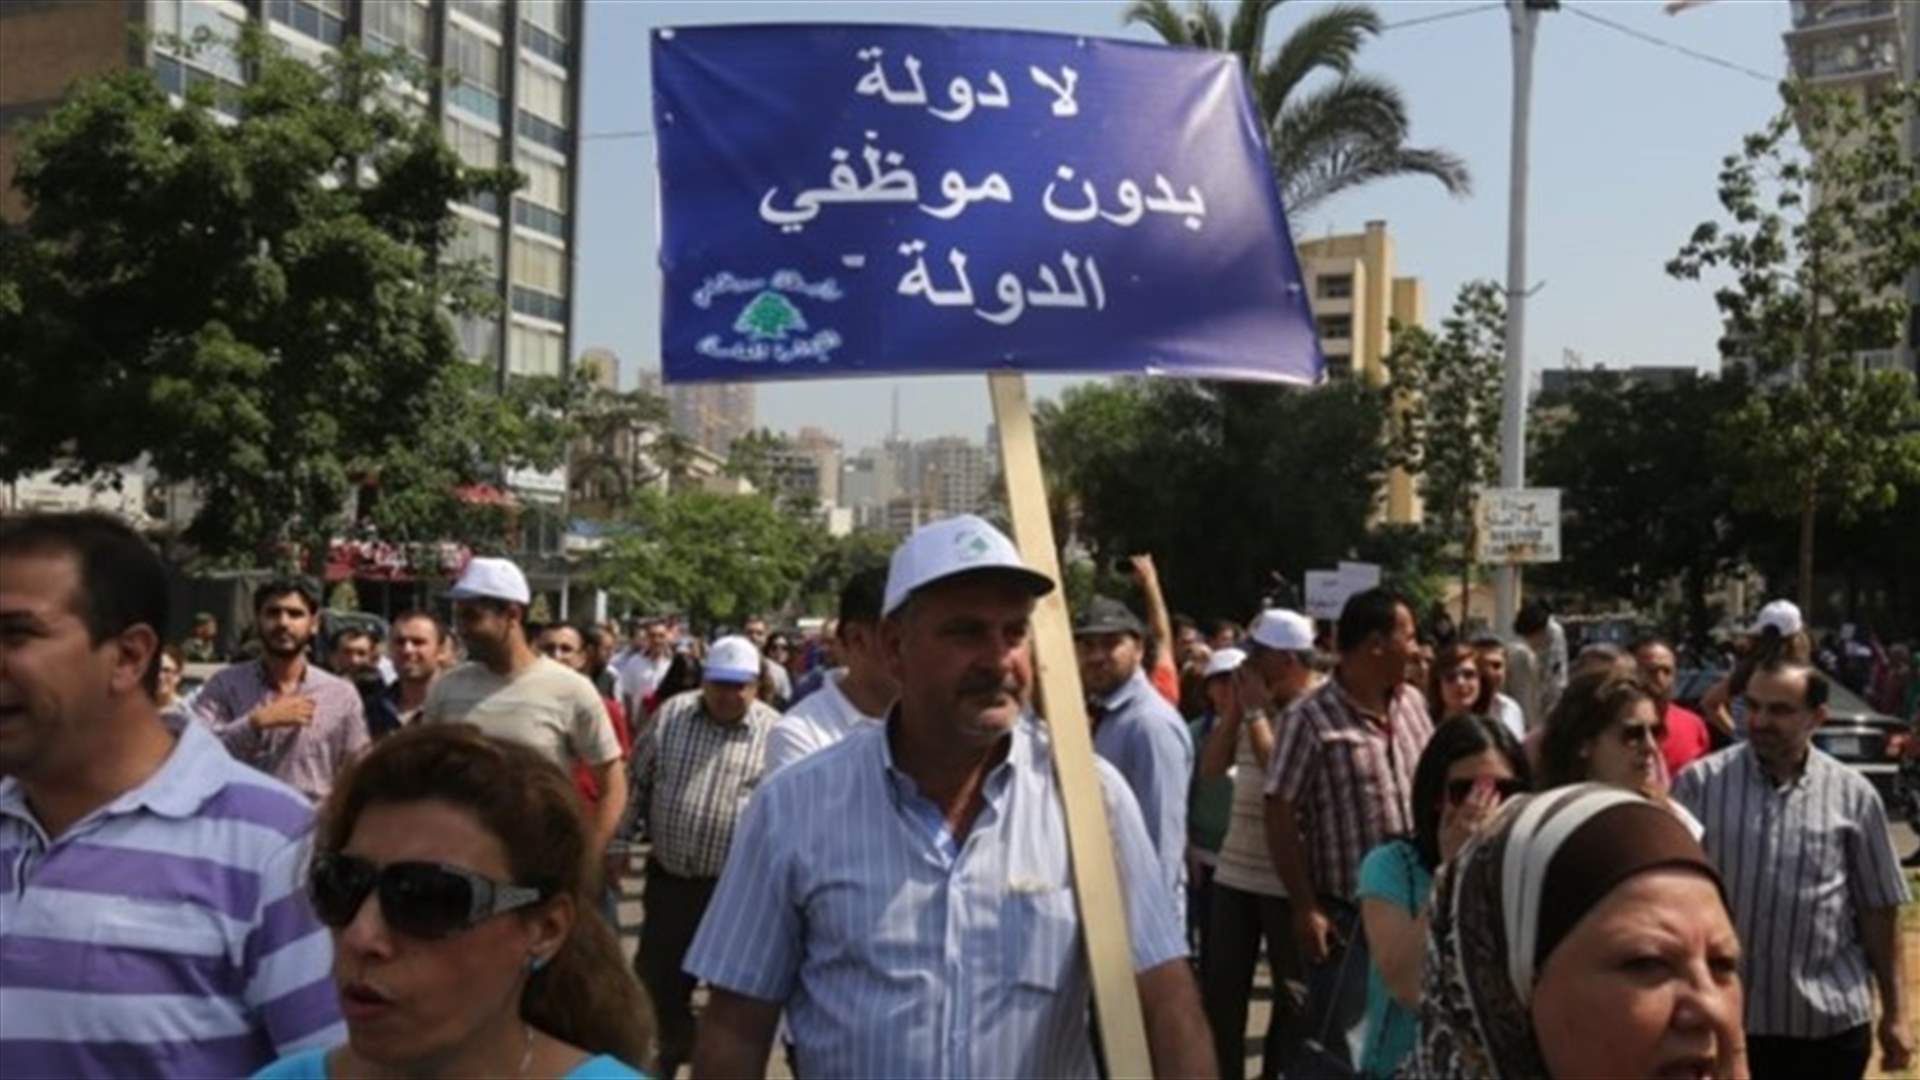 Lebanon public sector struggling harder amid economic meltdown